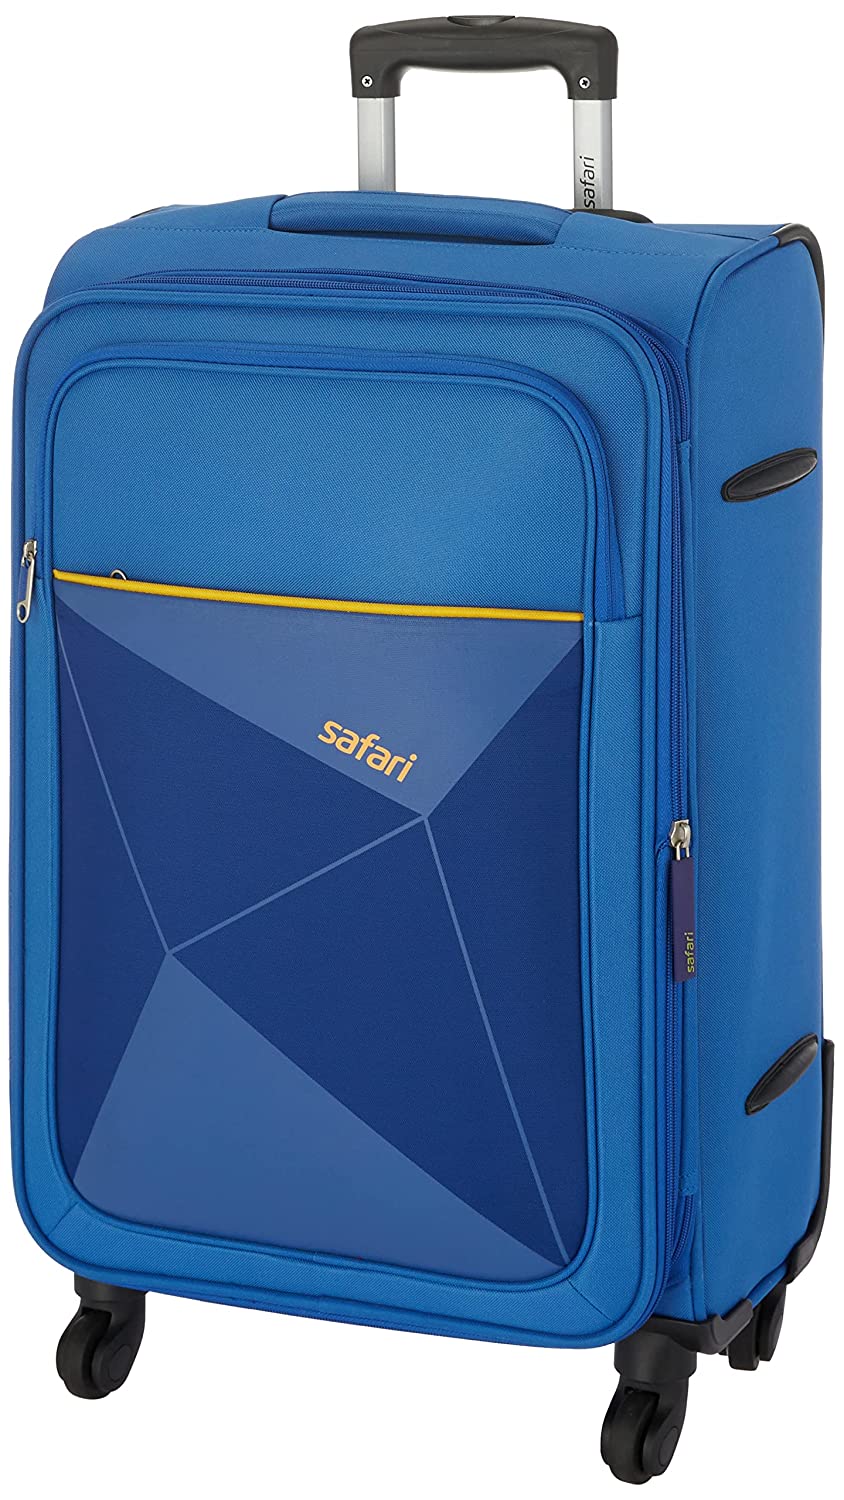 SAFARI Rapid 67 cm Medium Size  24 inch  8 Wheel Soft Luggage Trolley Bag  Expandable Checkin Suitcase  24 inch Blue  Price in India  Flipkartcom